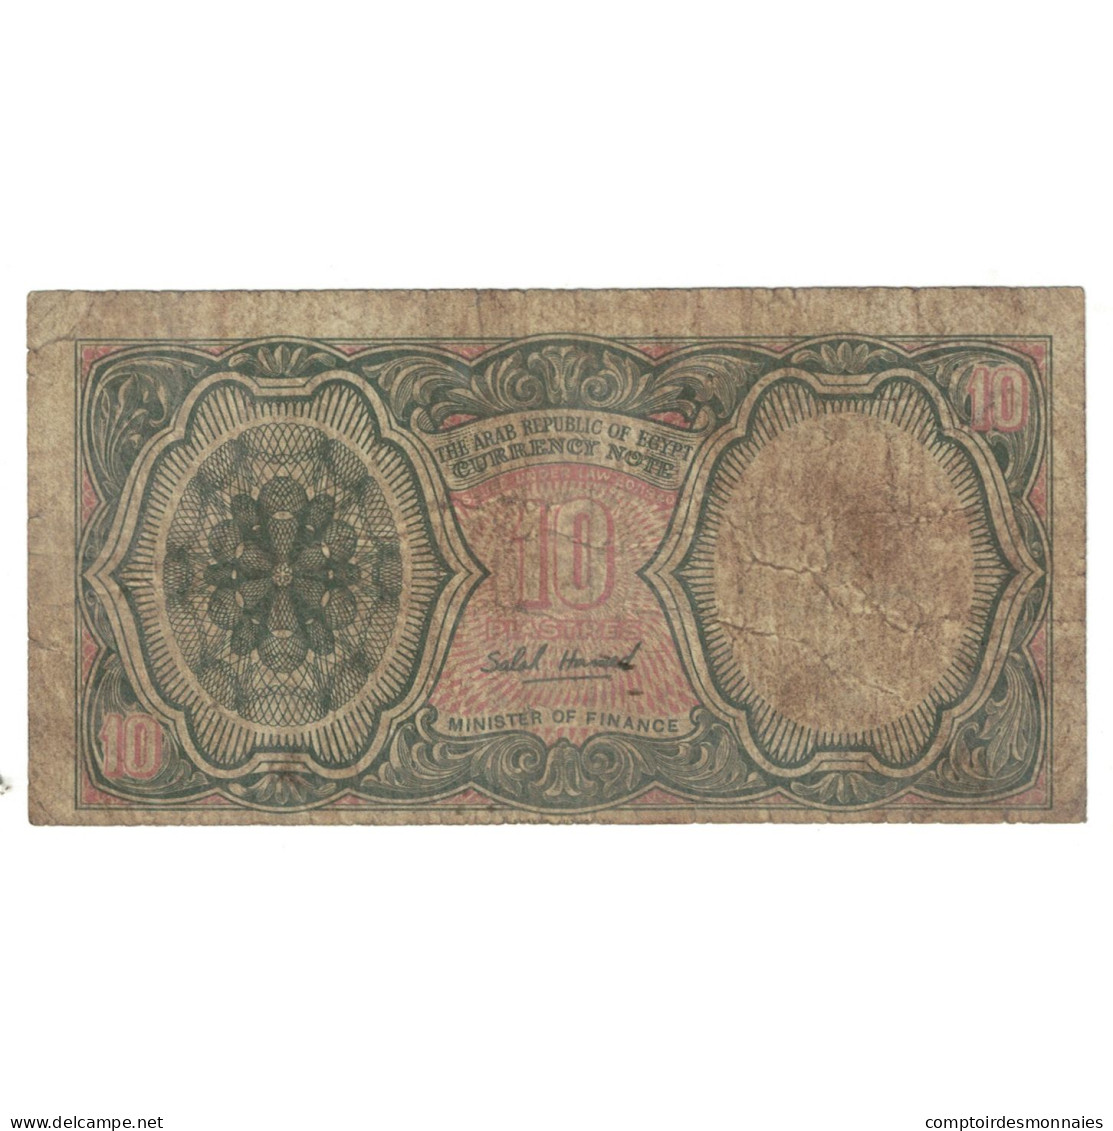 Billet, Égypte, 10 Piastres, L.1940, KM:183a, B - Egipto